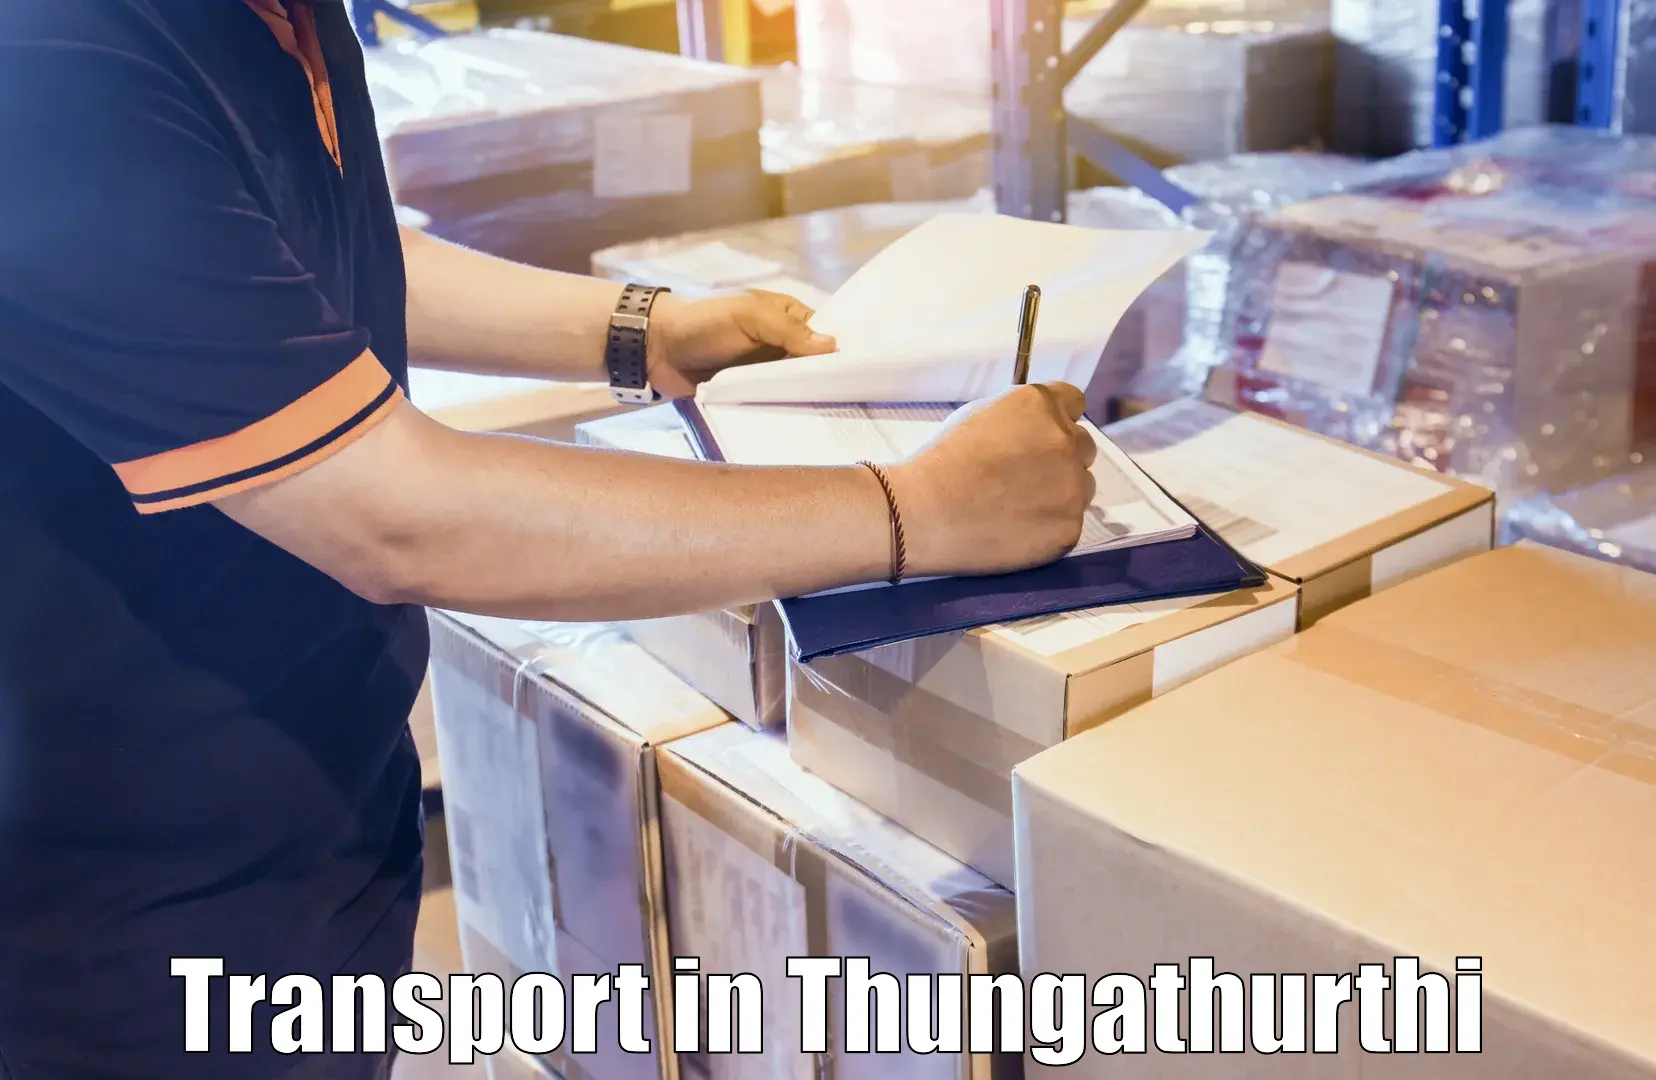 Transportation services in Thungathurthi